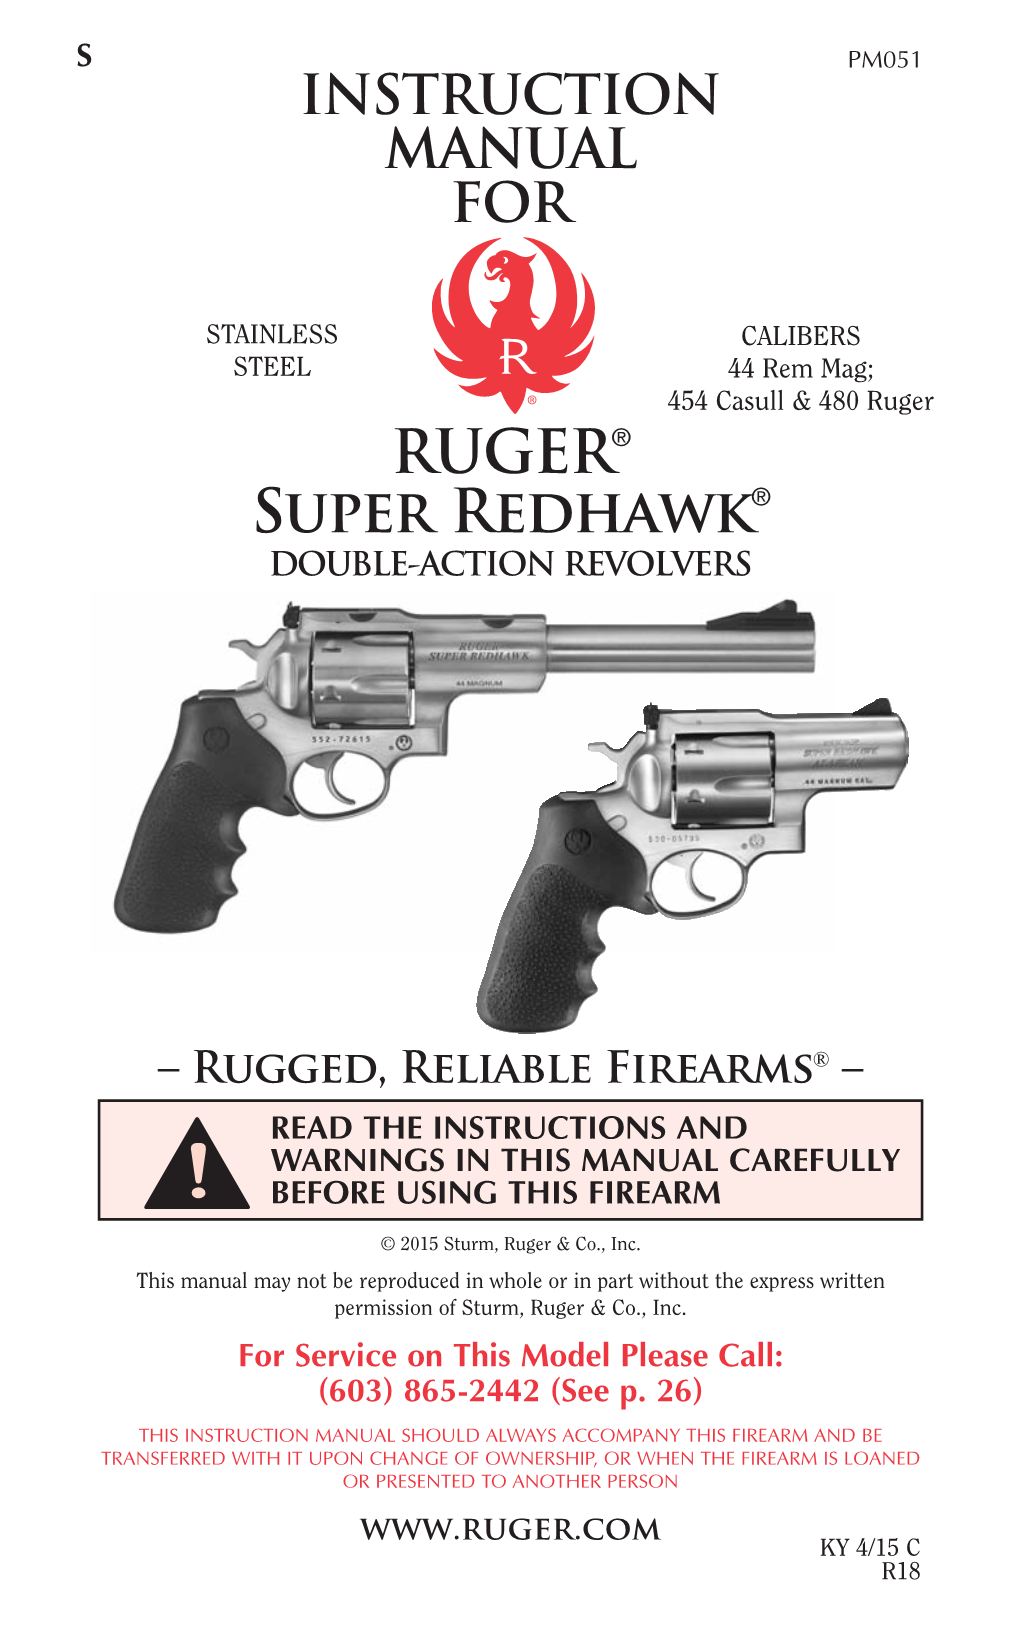 Super Redhawk Rev